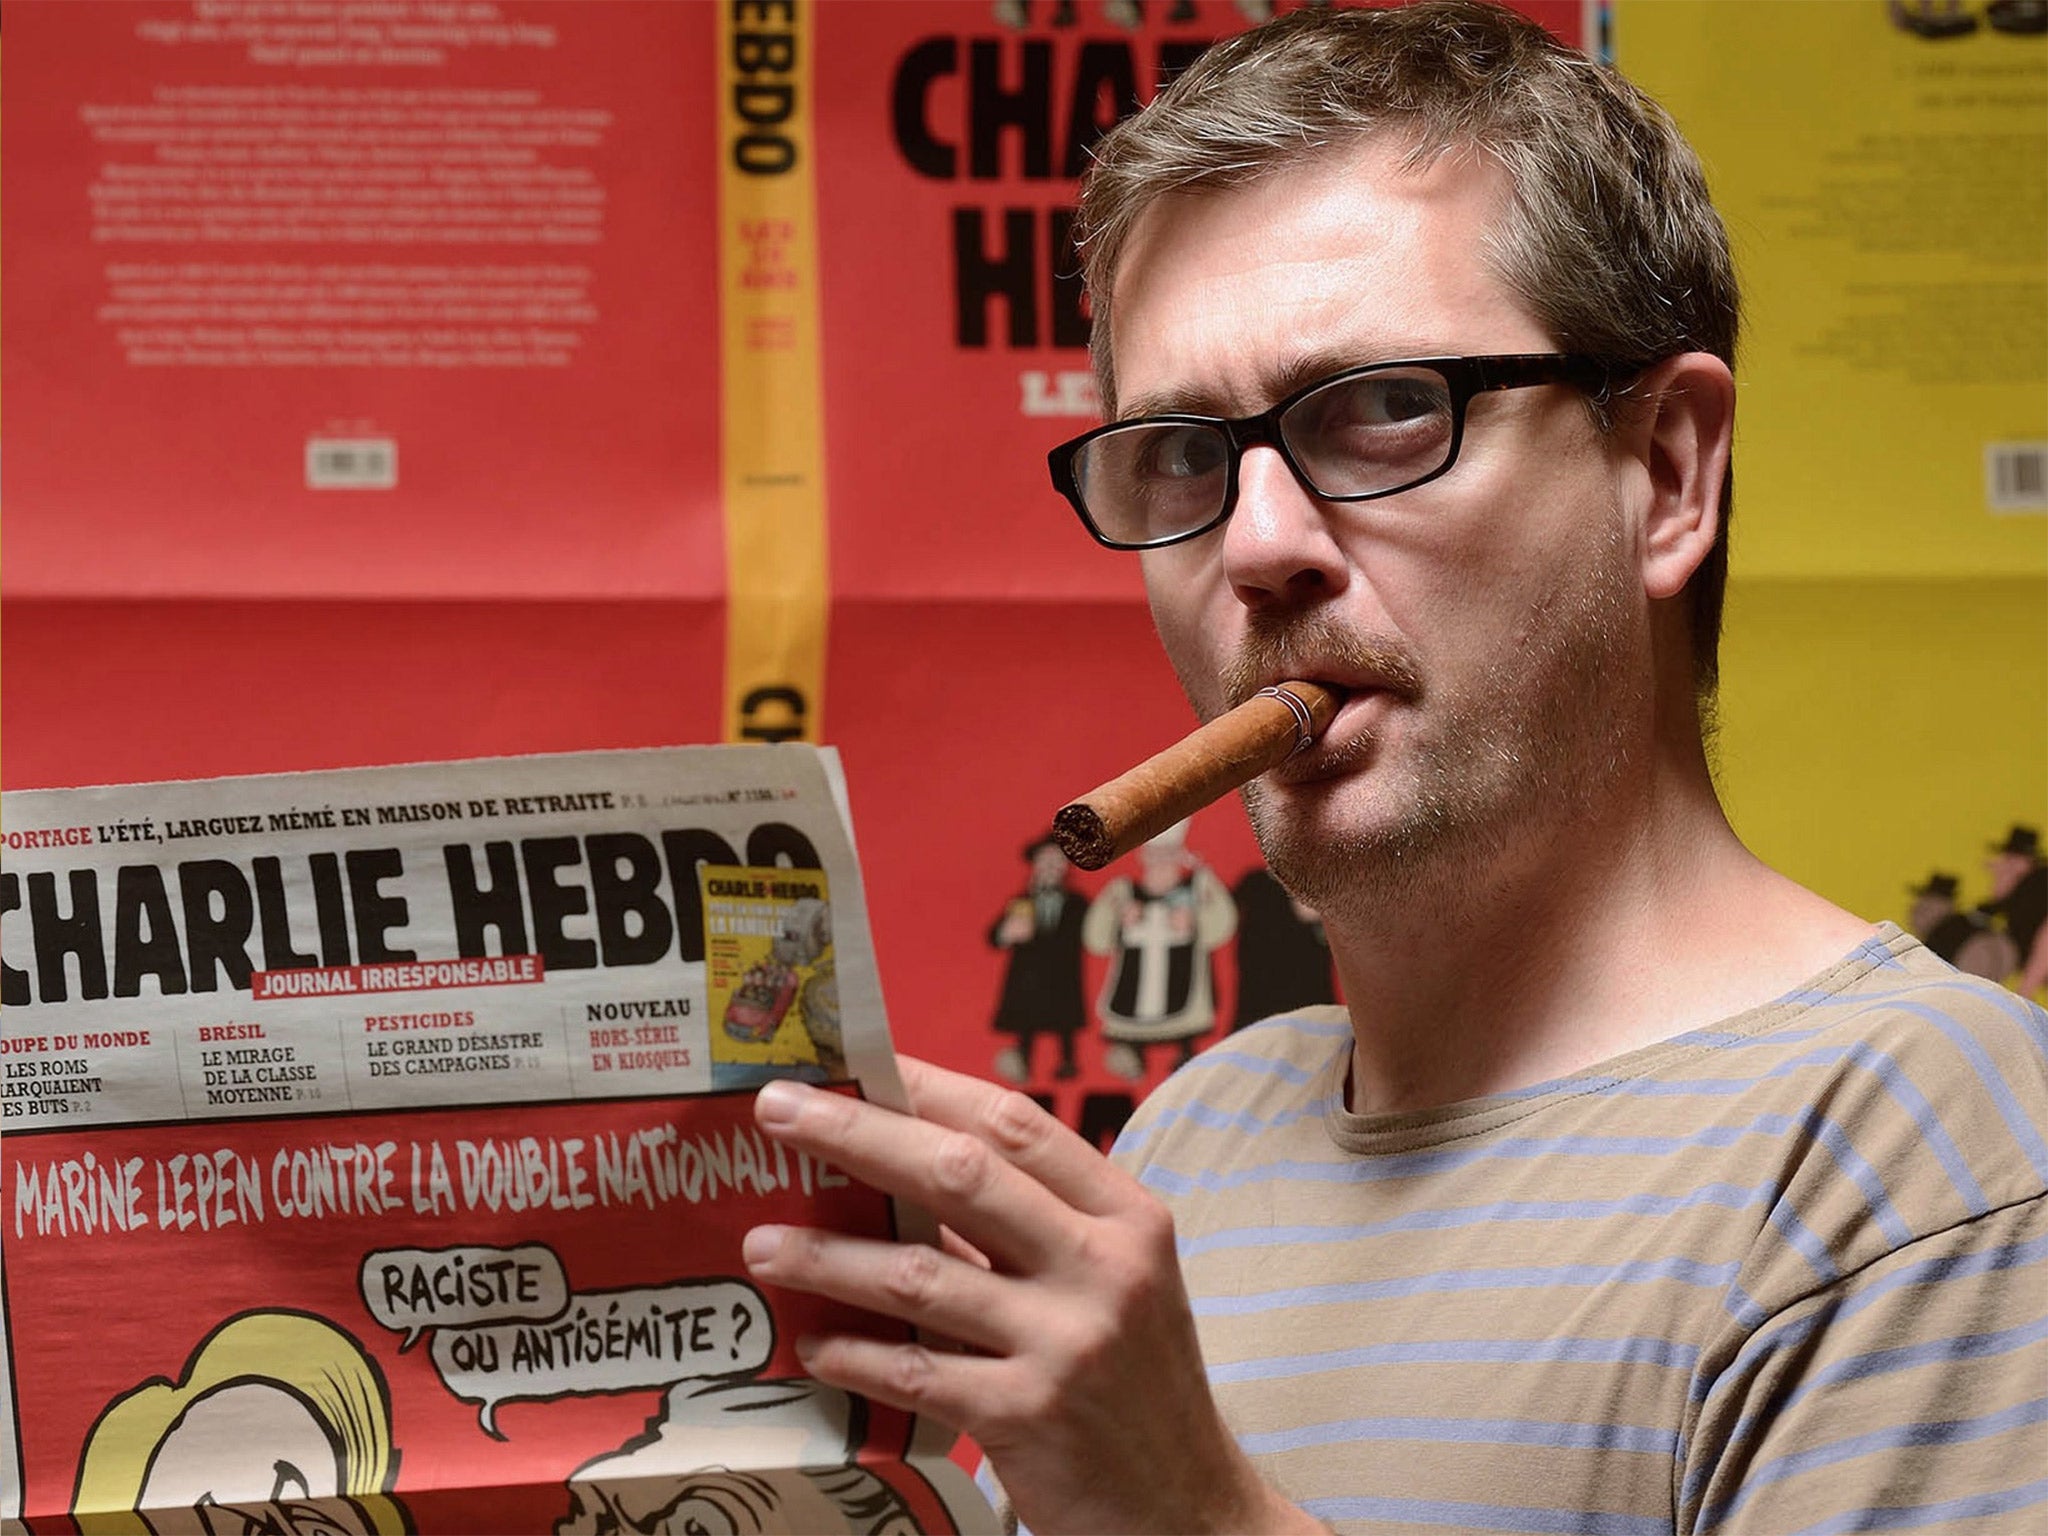 Charb, editor of Charlie Hebdo